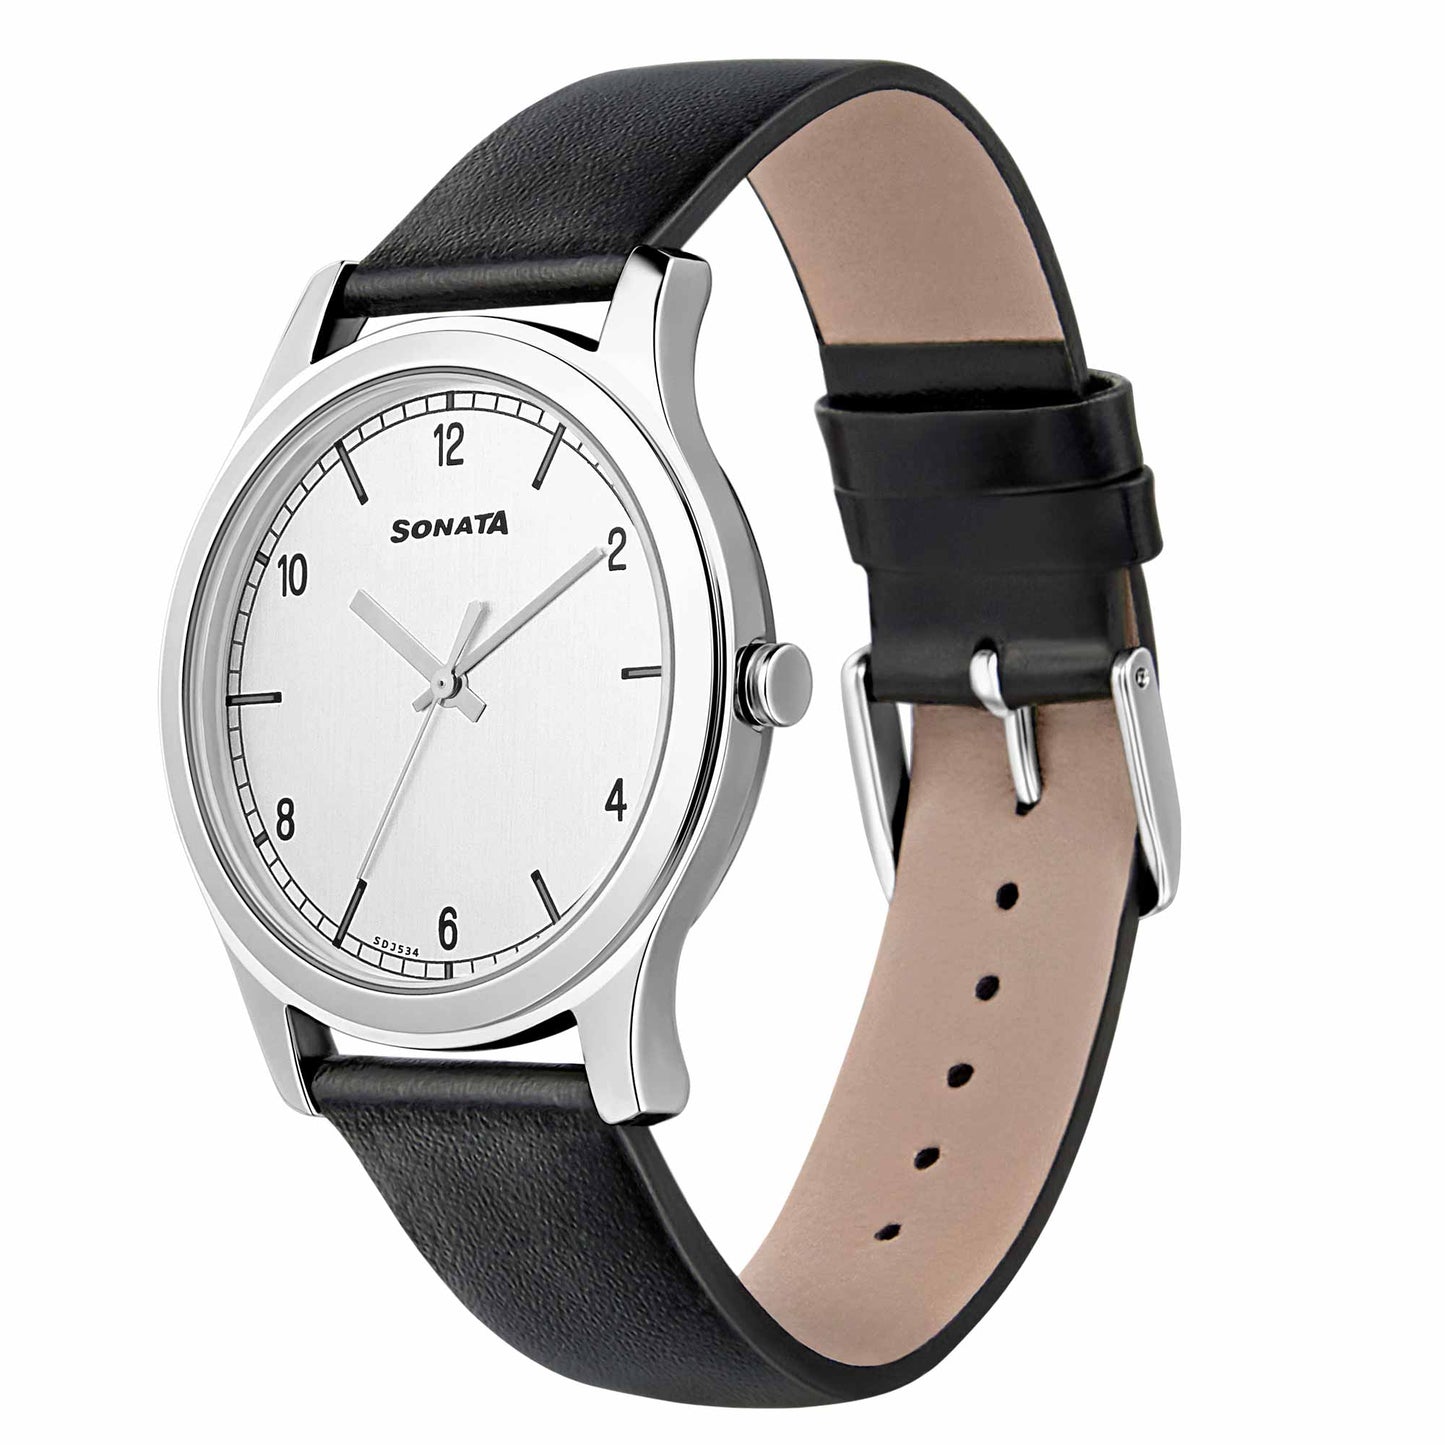 Sonata Quartz Analog Silver Dial Leather Strap Watch for Men